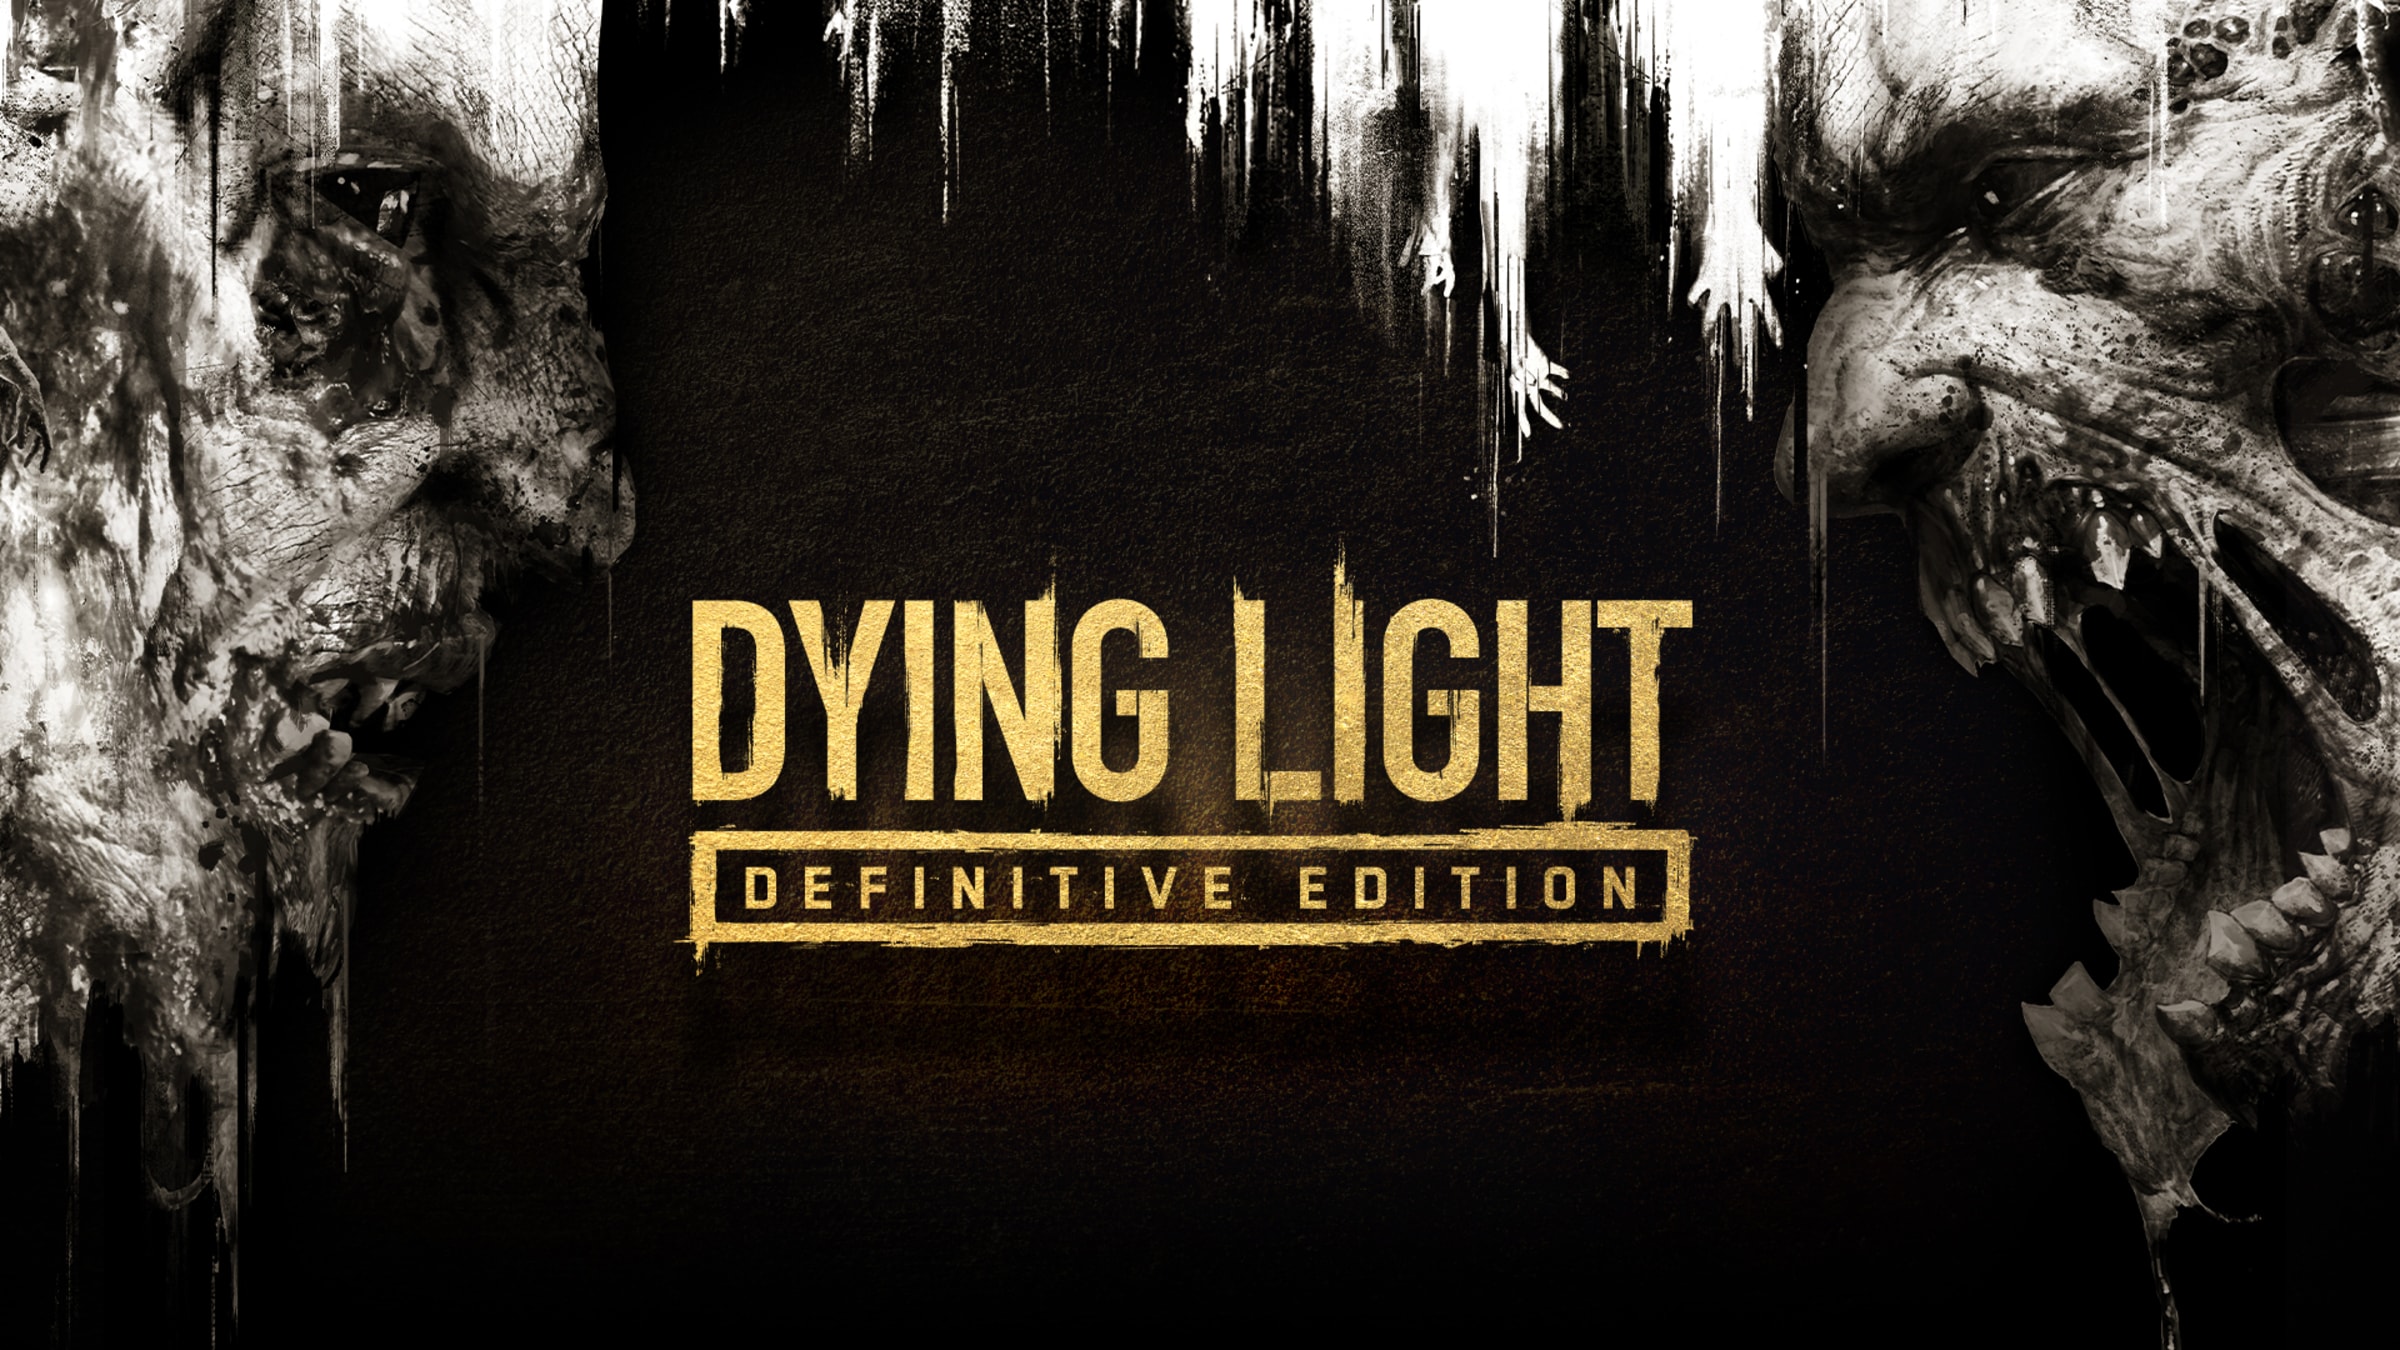 Dying Light 2 Nintendo Switch, Deals Nintendo Switch Games